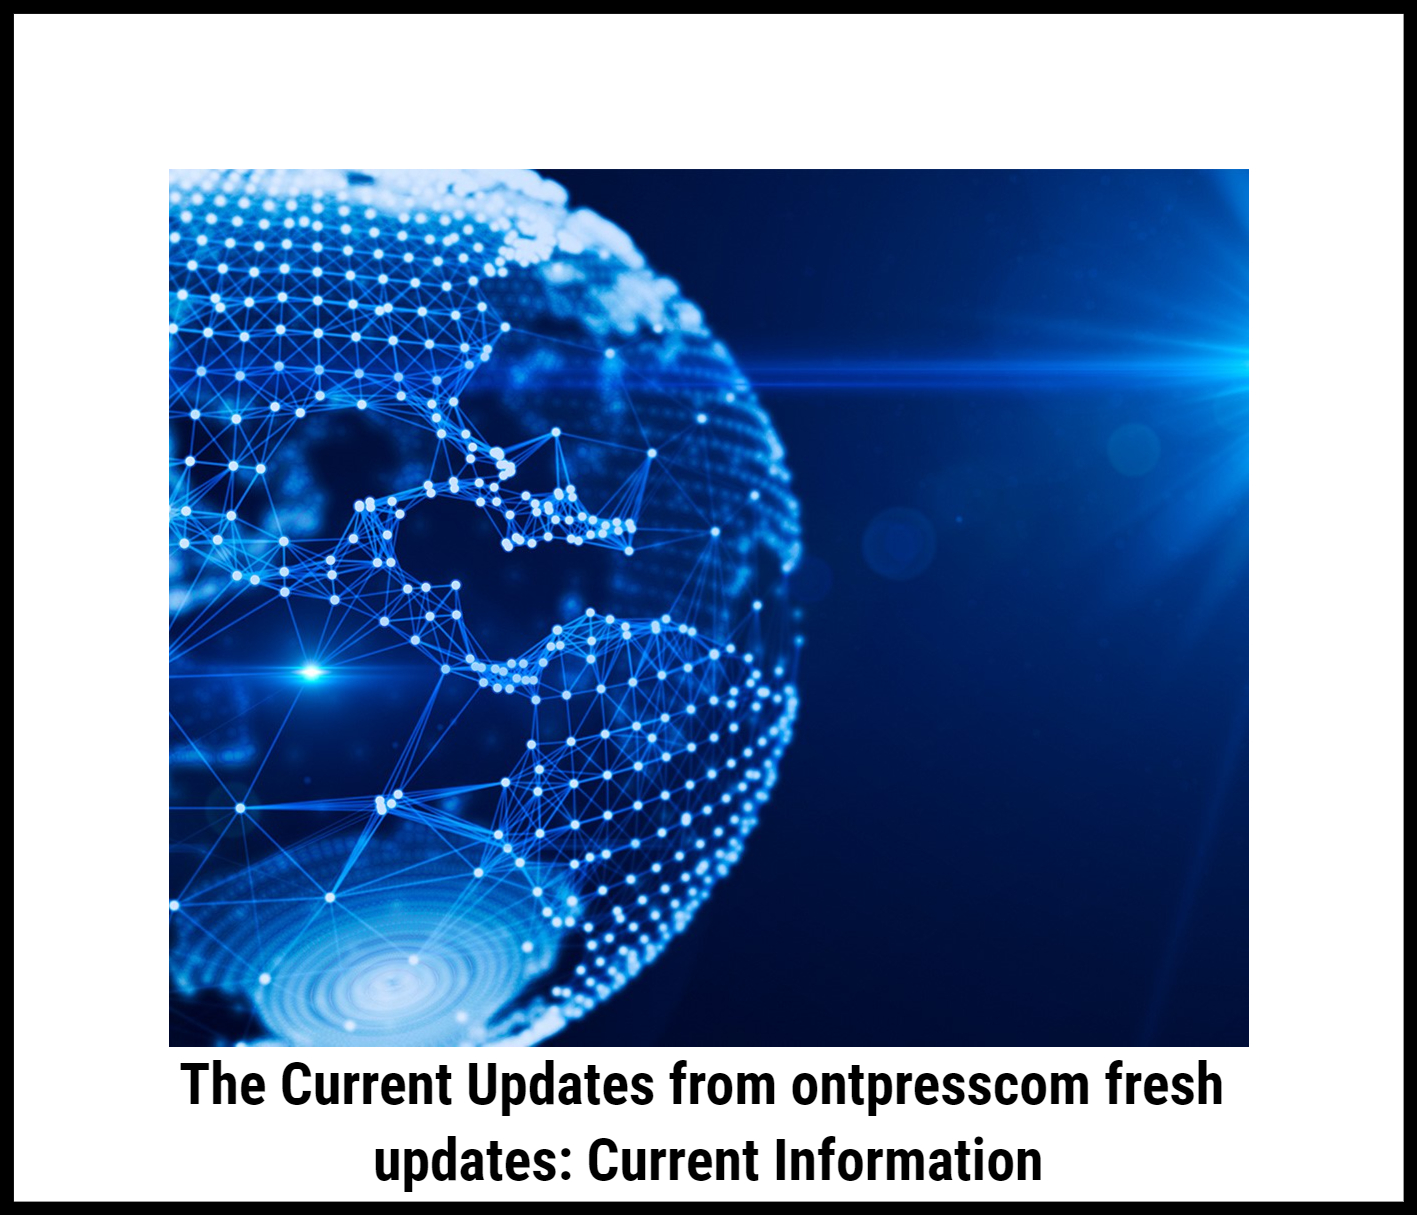 The Current Updates from ontpresscom fresh updates: Current Information